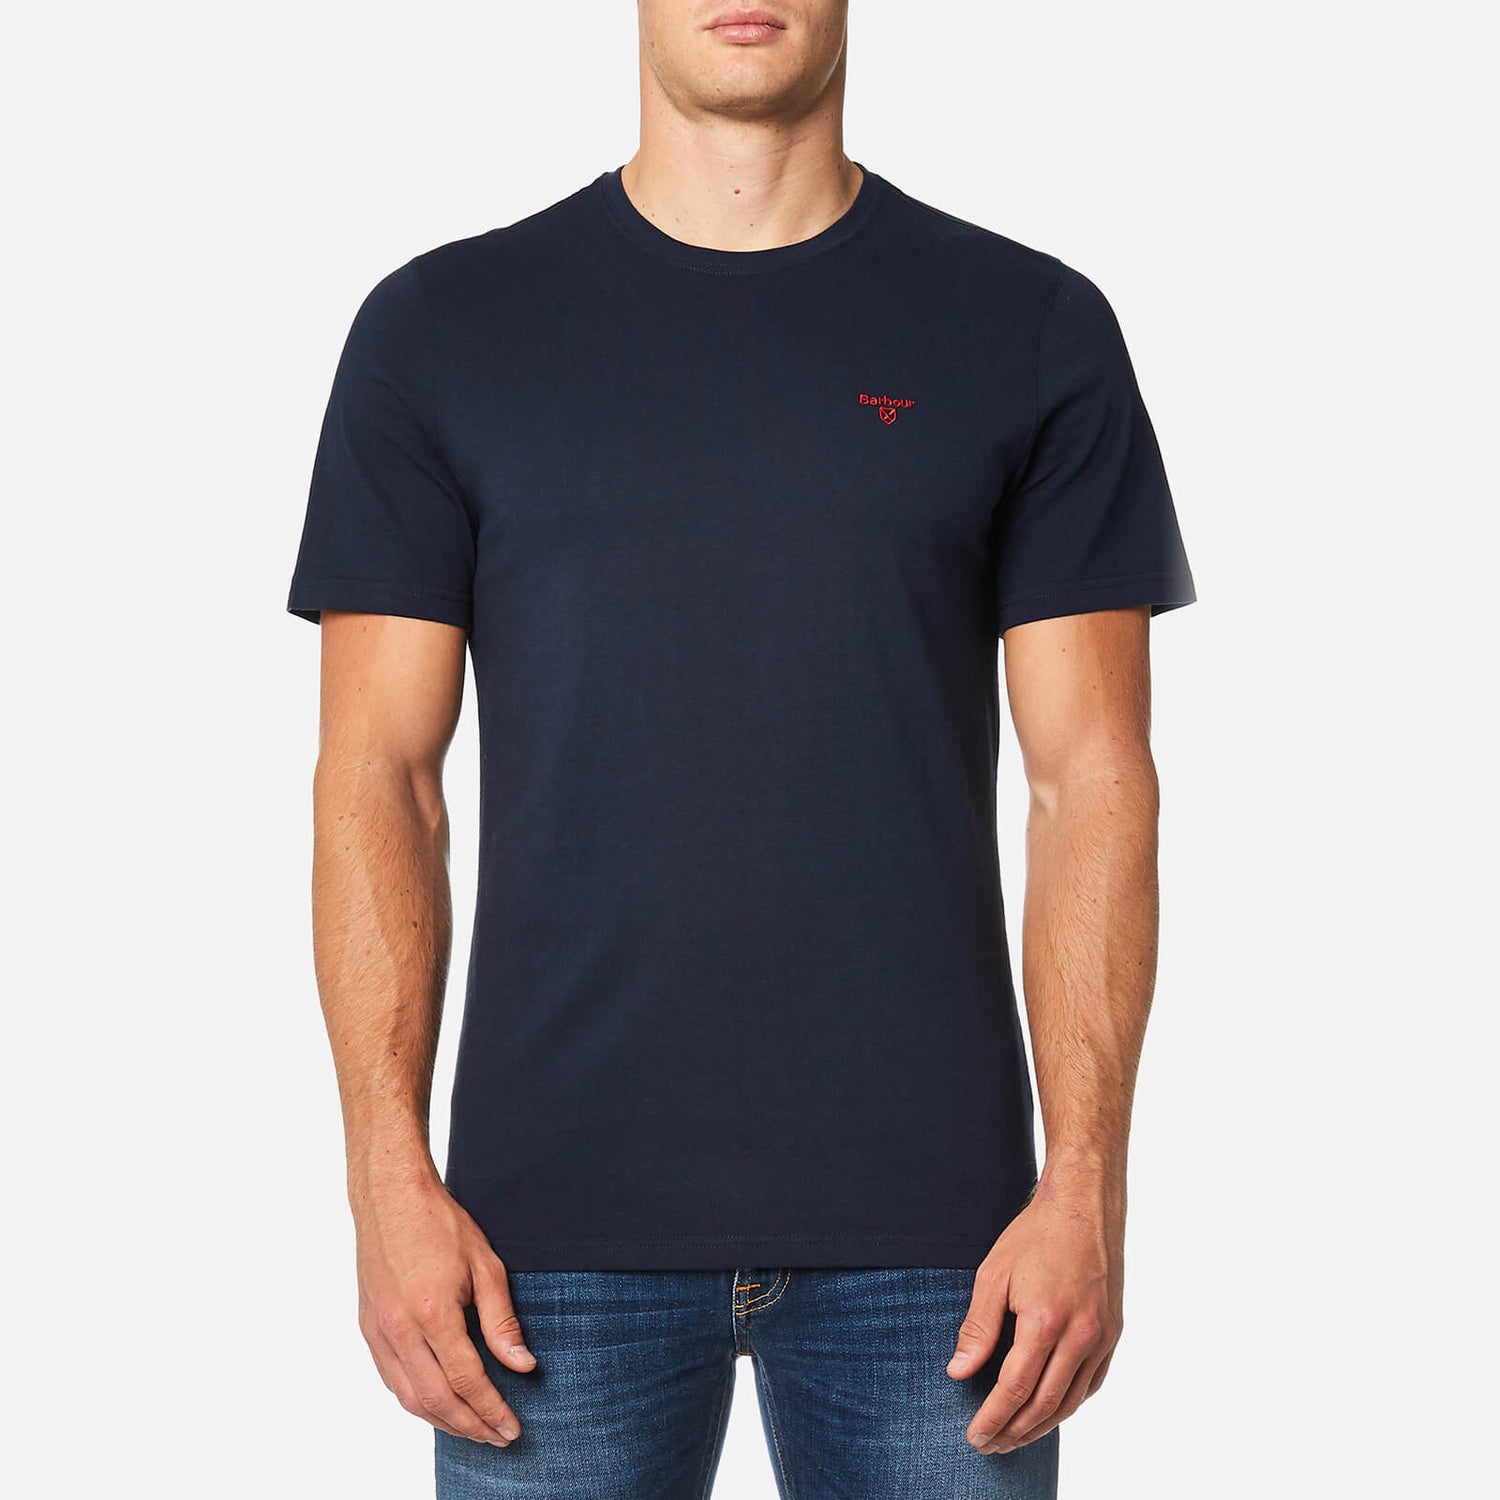 Barbour Men's Sports T-Shirt - Navy